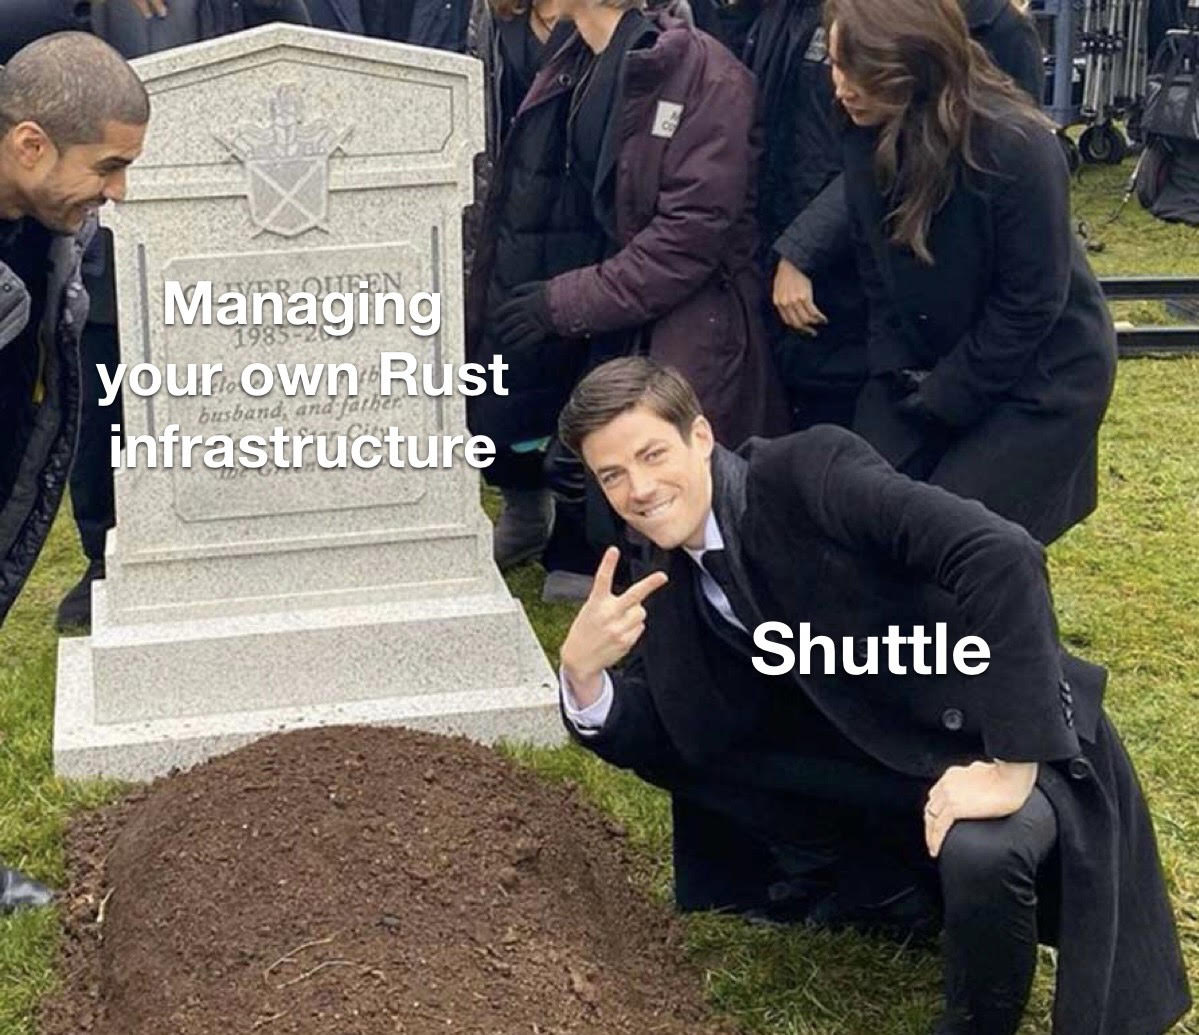 Going serverless with Rust and Shuttle blog meme